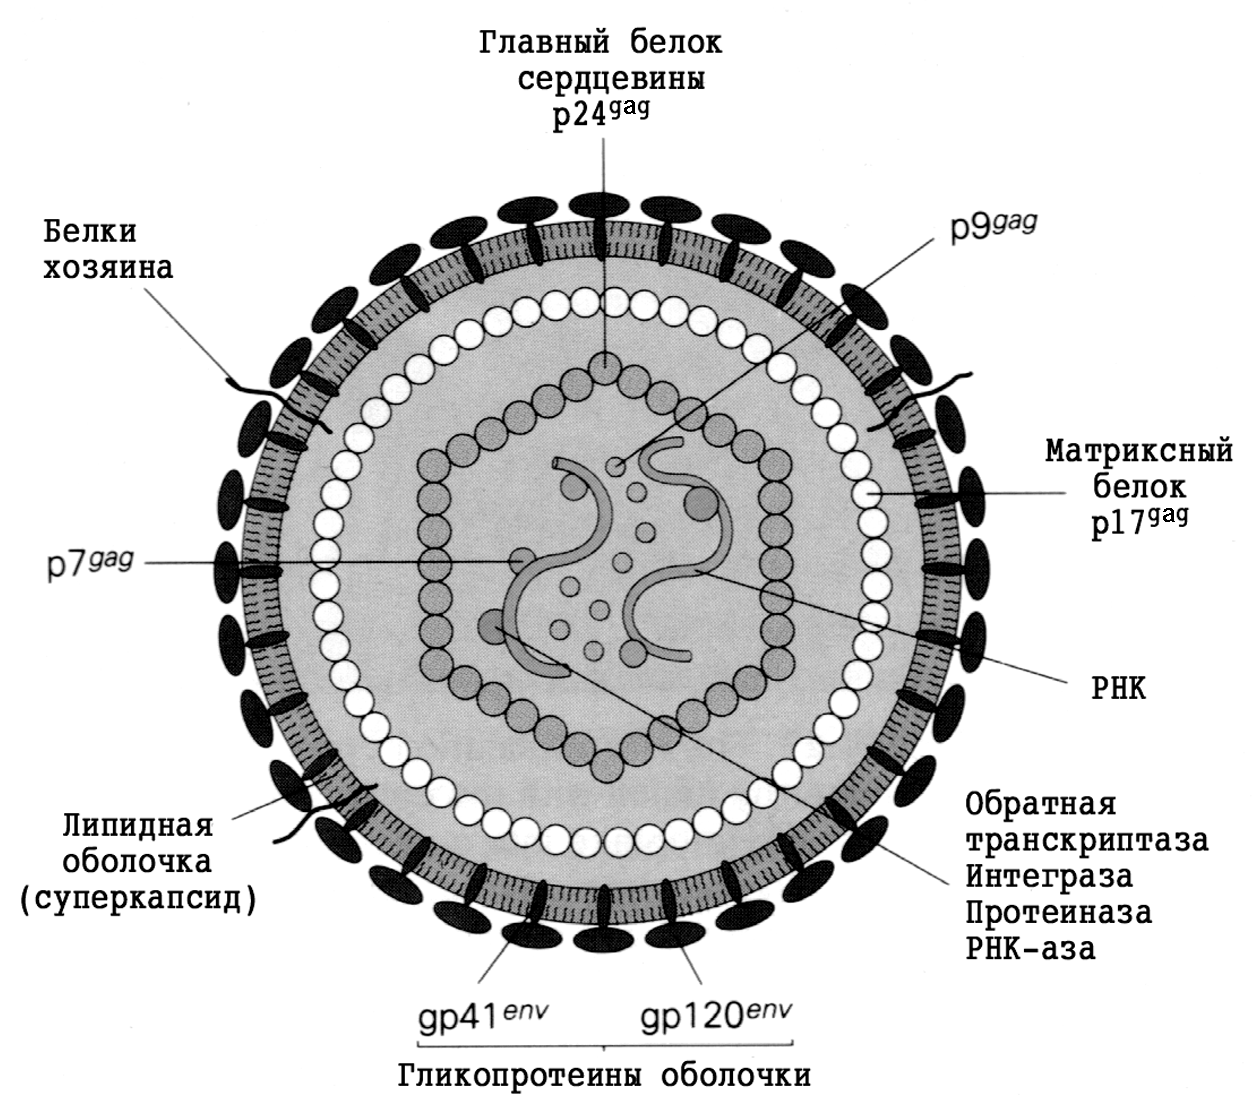 Вич название вируса. Схема строения вируса иммунодефицита человека. Строение вириона микробиология. Схема строения вируса (вириона). Структура вириона вируса СПИДА.